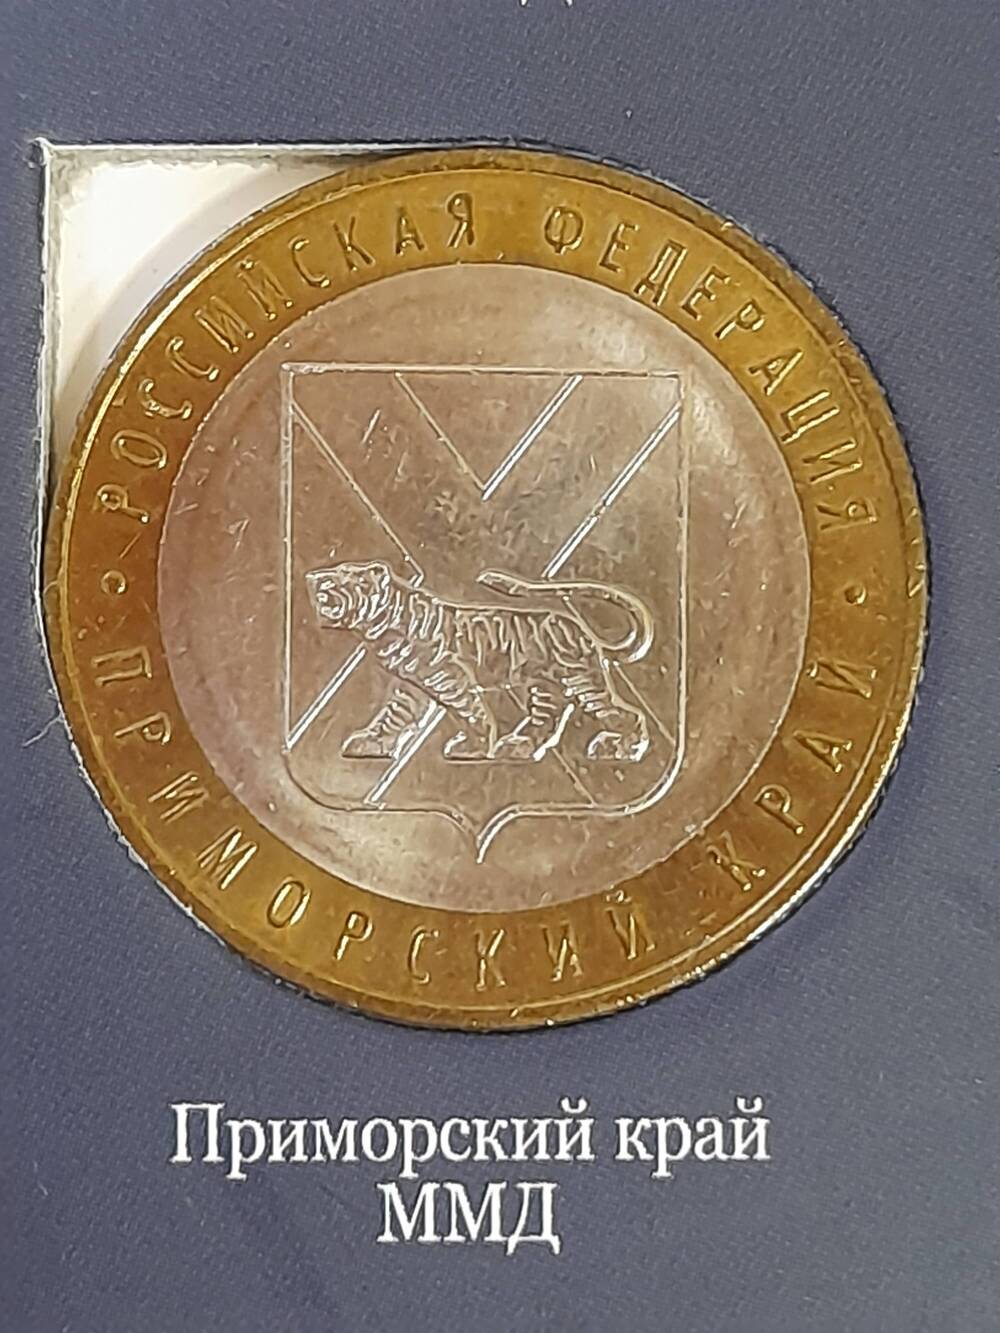 Монета памятная 10 РУБЛЕЙ. Приморский край 2006 г. Россия